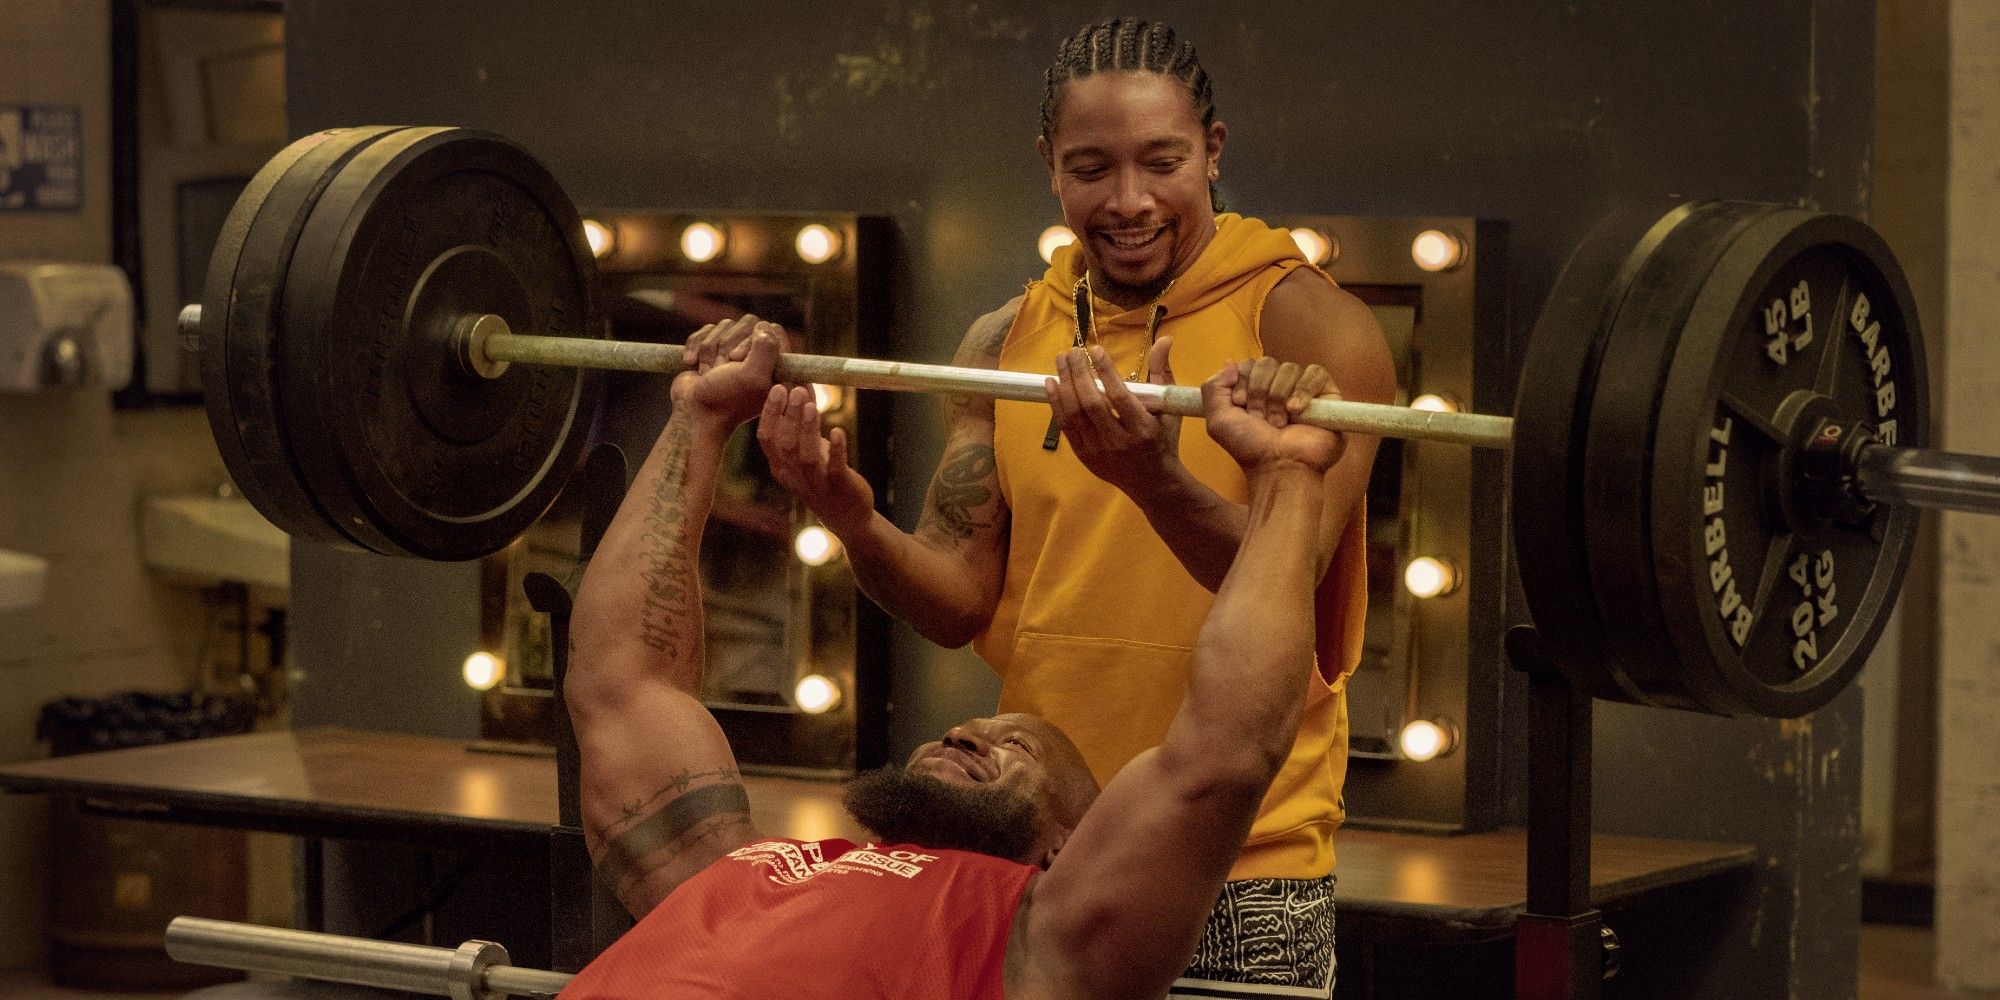 Allen Maldonado as Rooster helping someone train in the gym in Heels